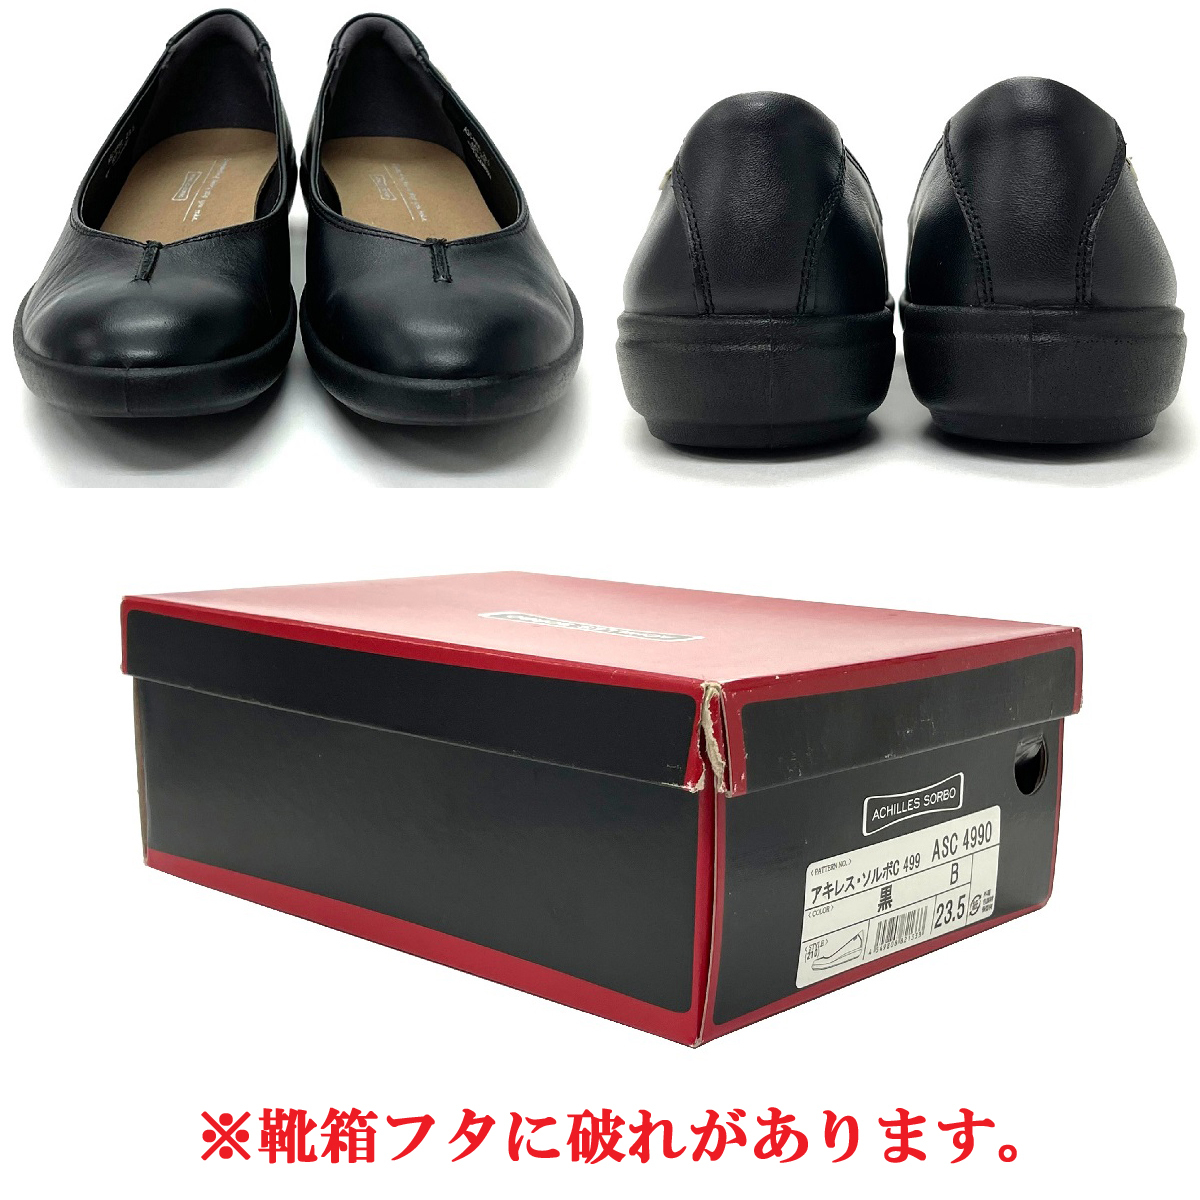  translation have!! ASC4990 black 23.5cm Achilles sorubo lady's shoes walking shoes 2E Achilles SORBO woman 032108